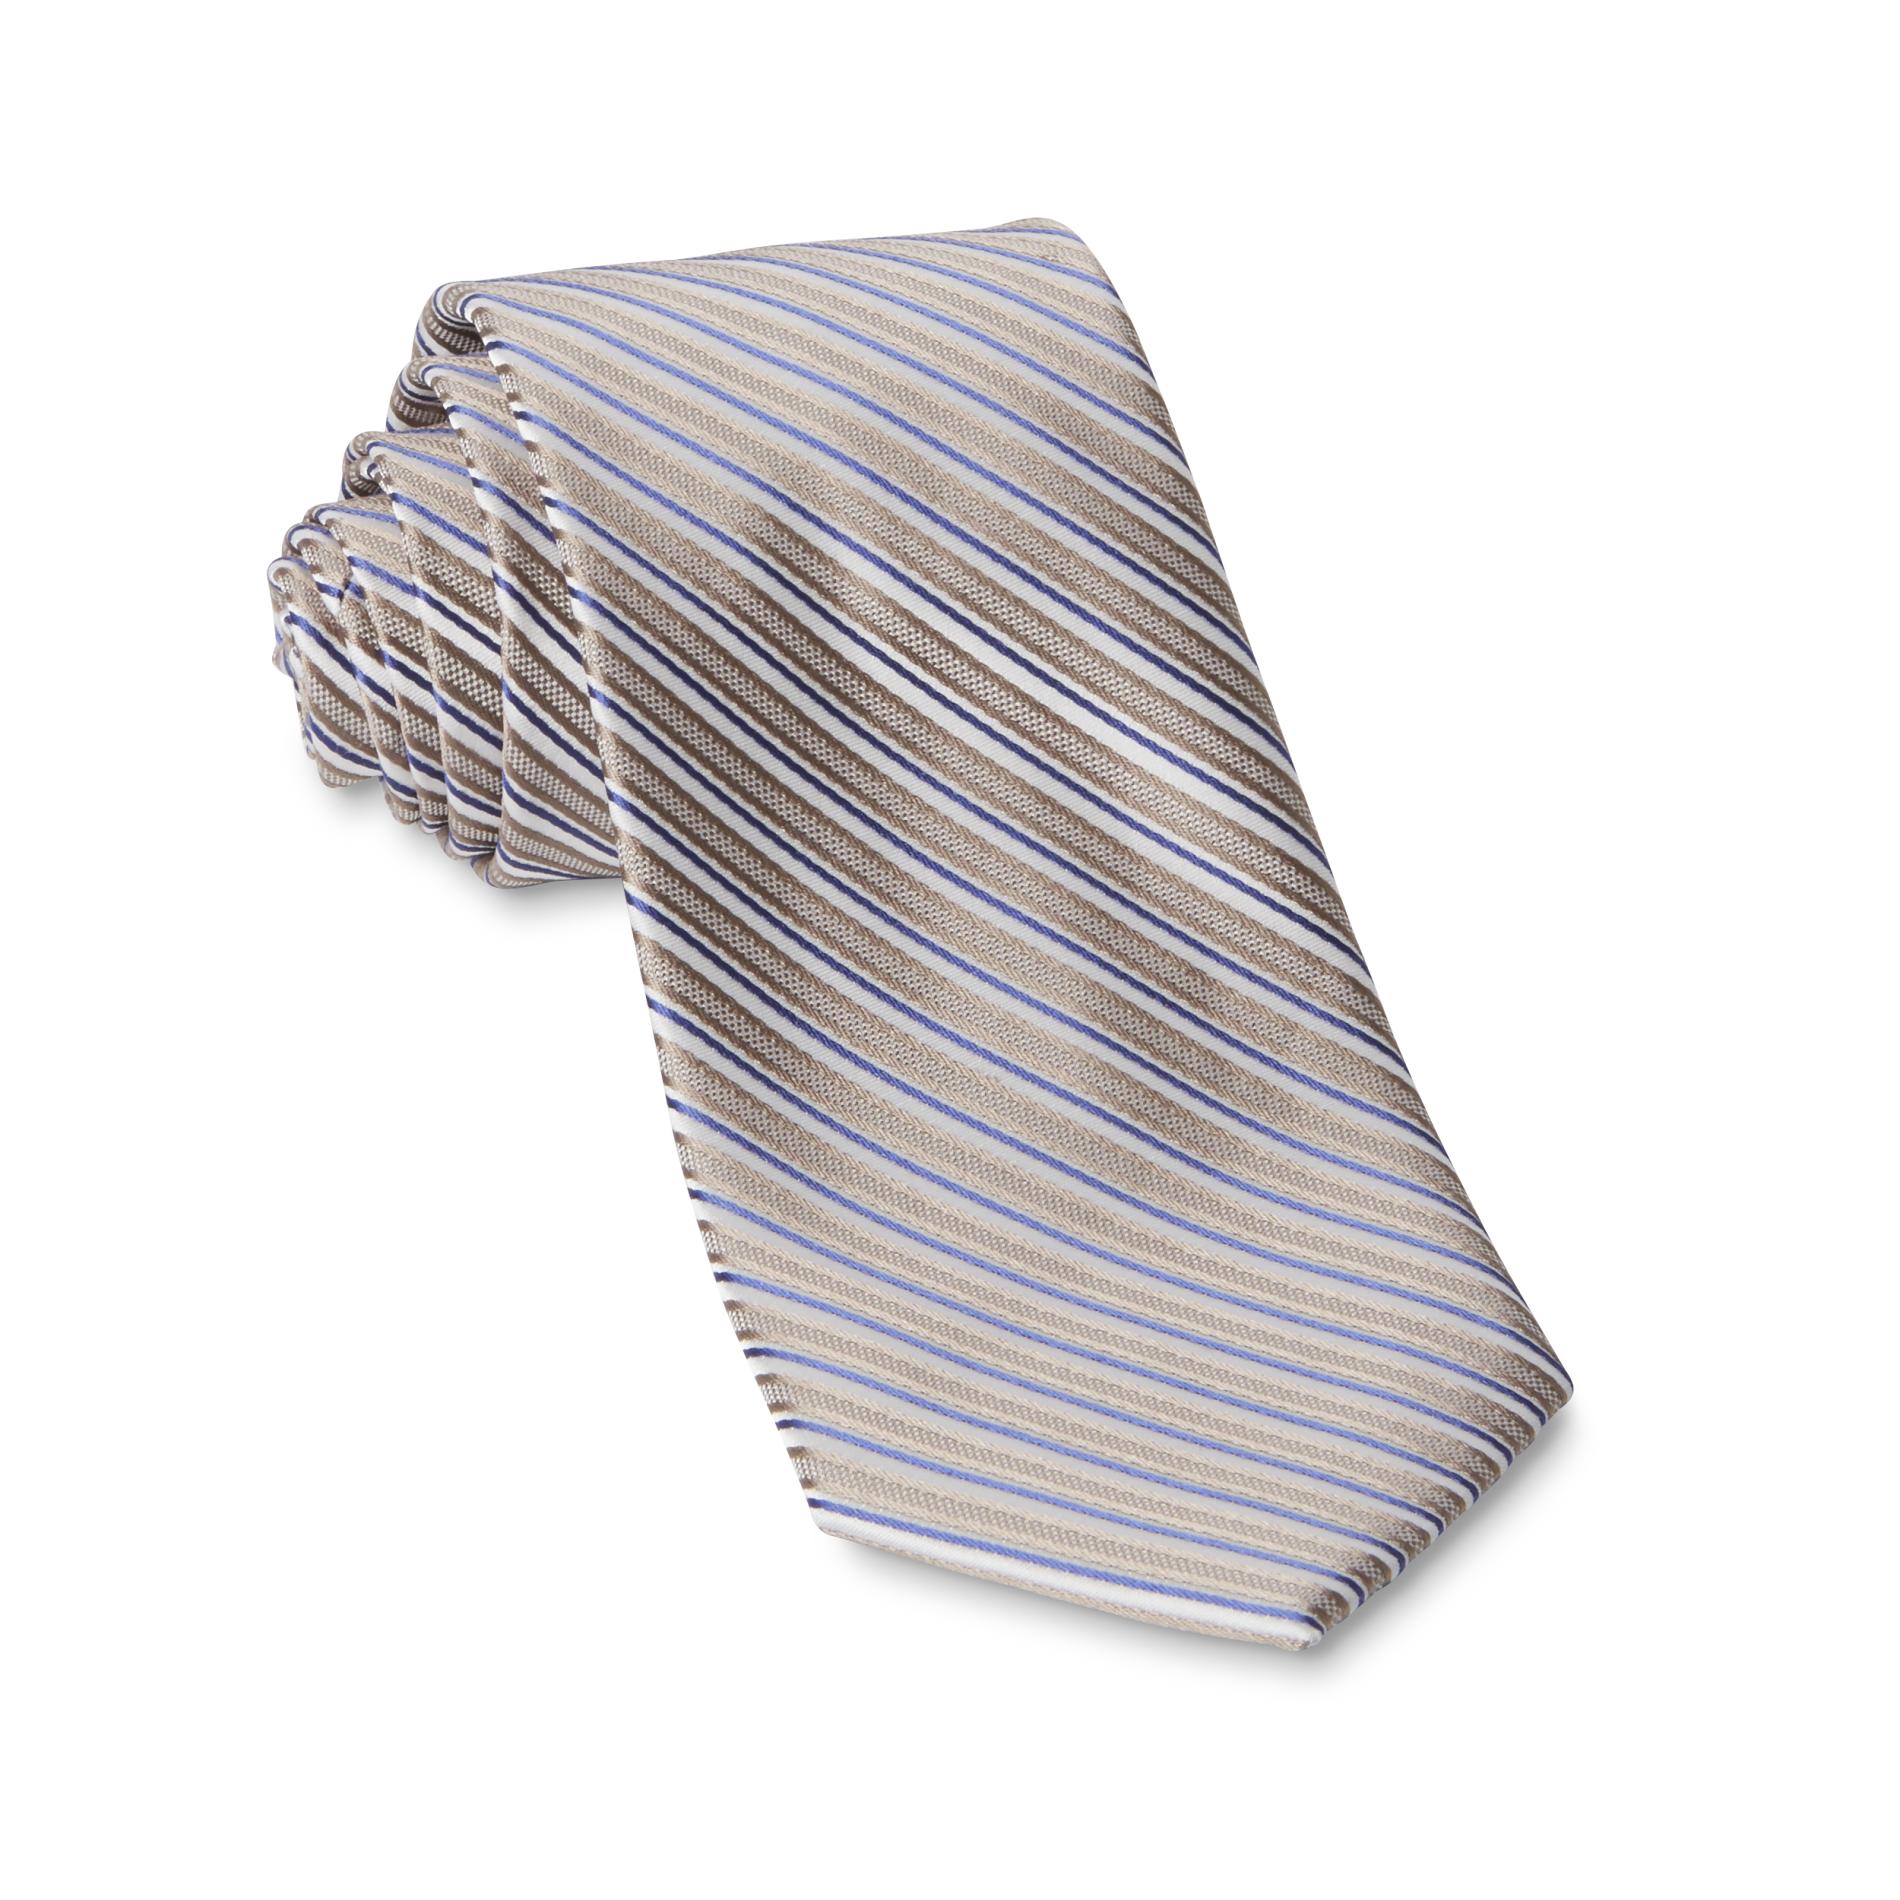 Covington Men's Necktie - Striped